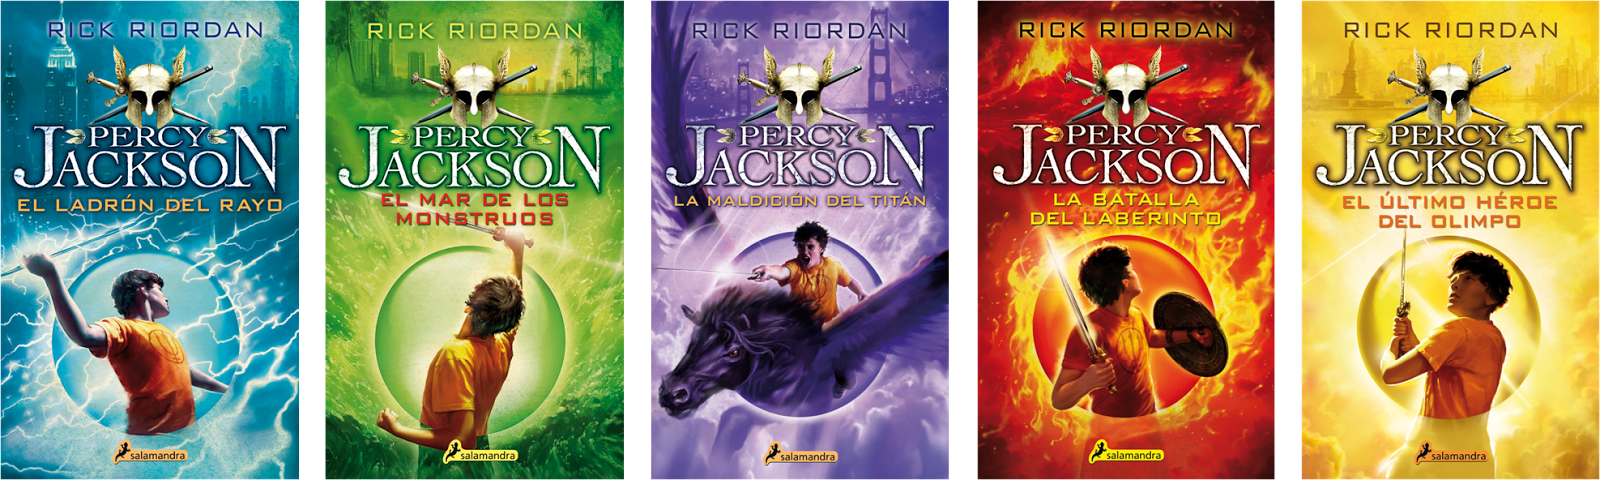 Percy Jackson| Rick Riordan (PDF) by Karbeyeditions on DeviantArt